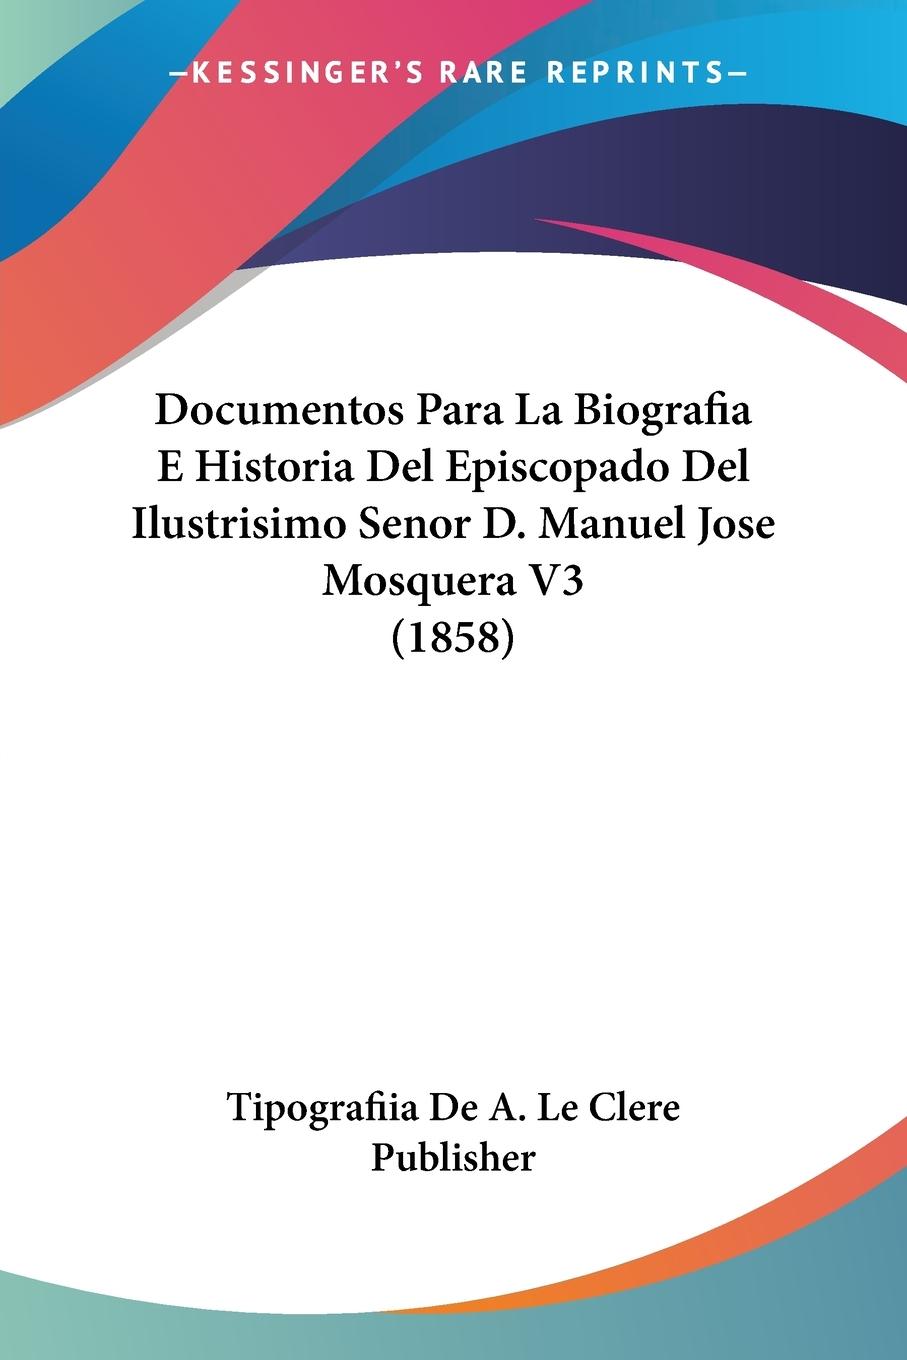 Documentos Para La Biografia E Historia Del Episcopado Del Ilustrisimo Senor D. Manuel Jose Mosquera V3 (1858) - Tipografiia de A. Le Clere Publisher